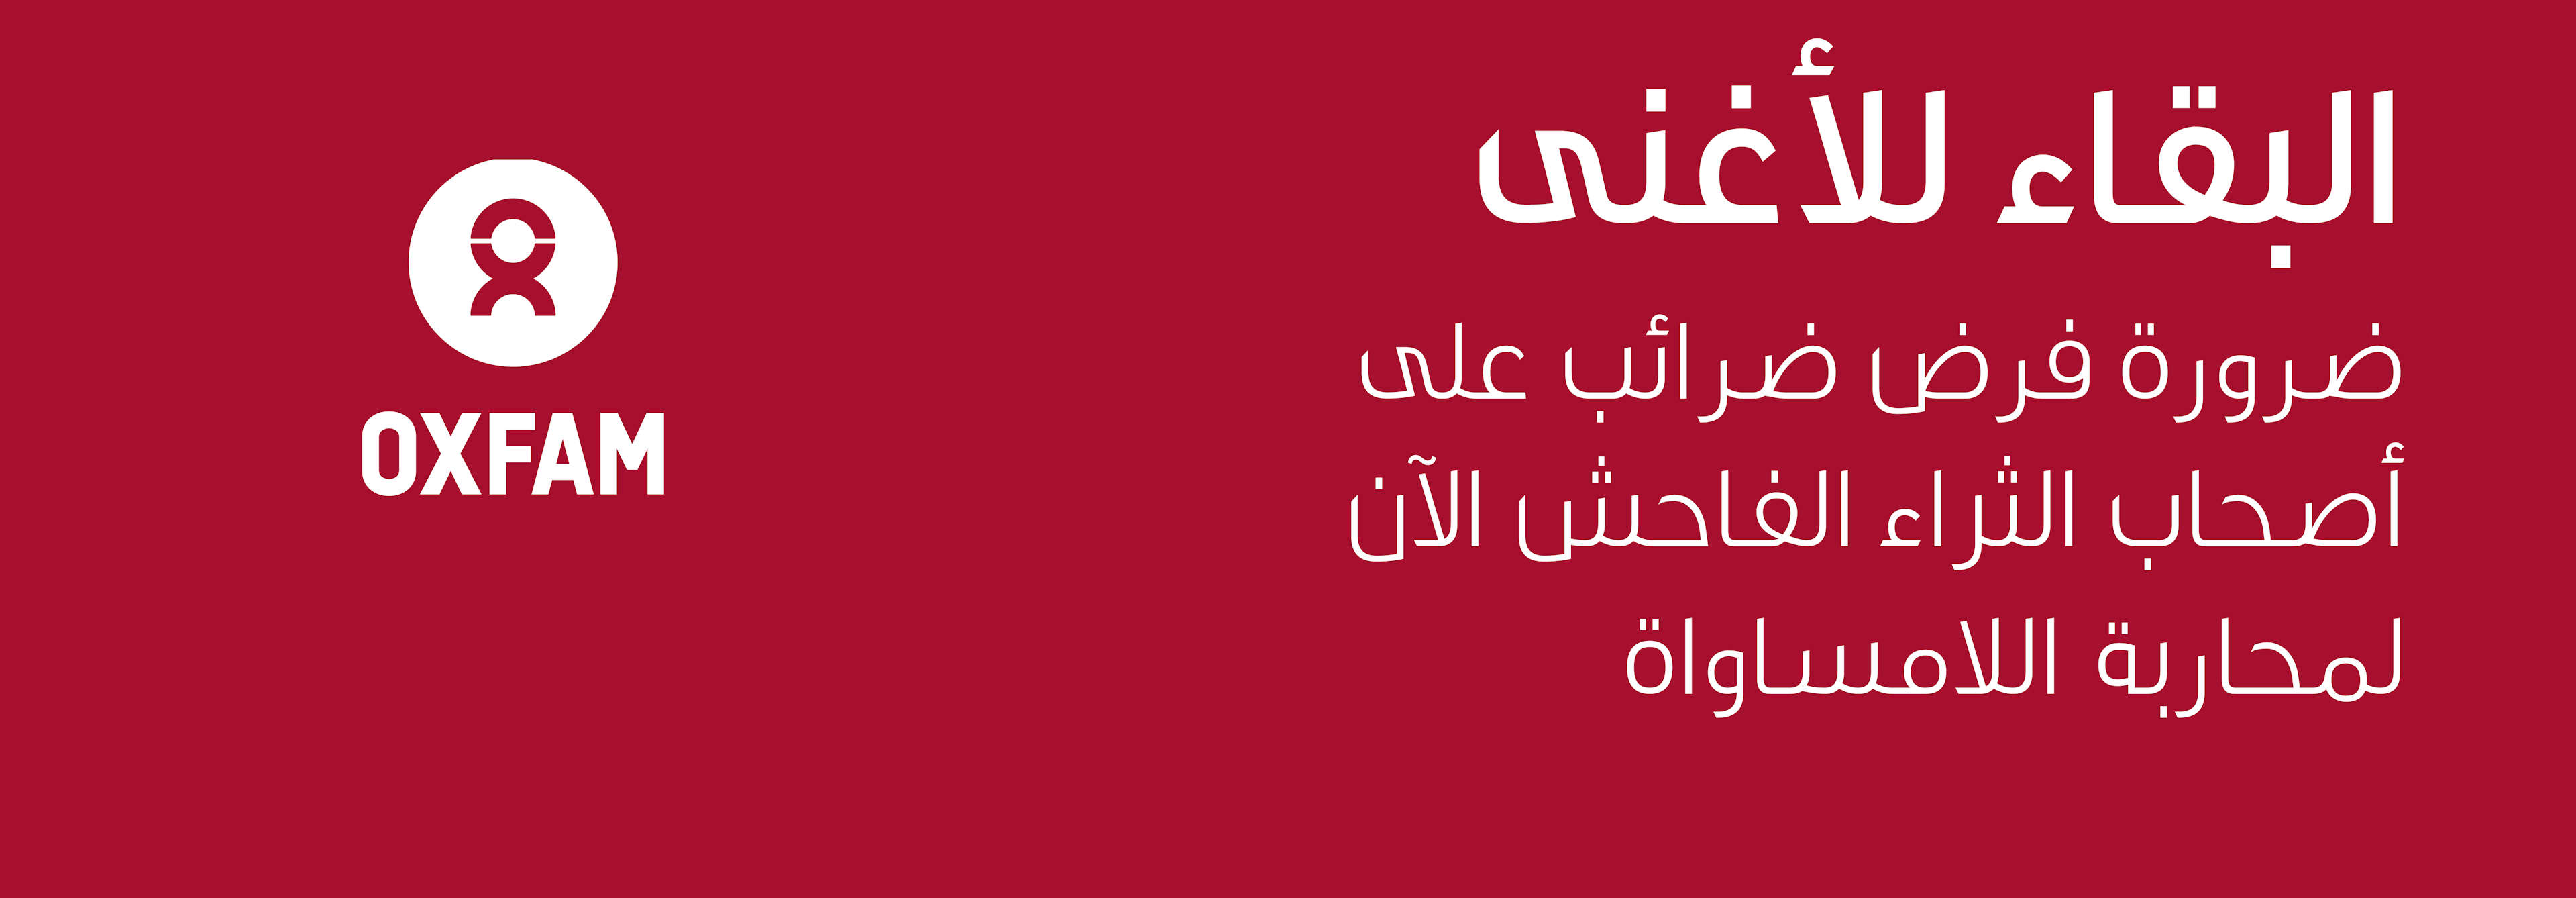 Cover Image for “البقاء للأغنى” تقرير دولي يرصد الثراء الفاحش ويطالب بالمساواة